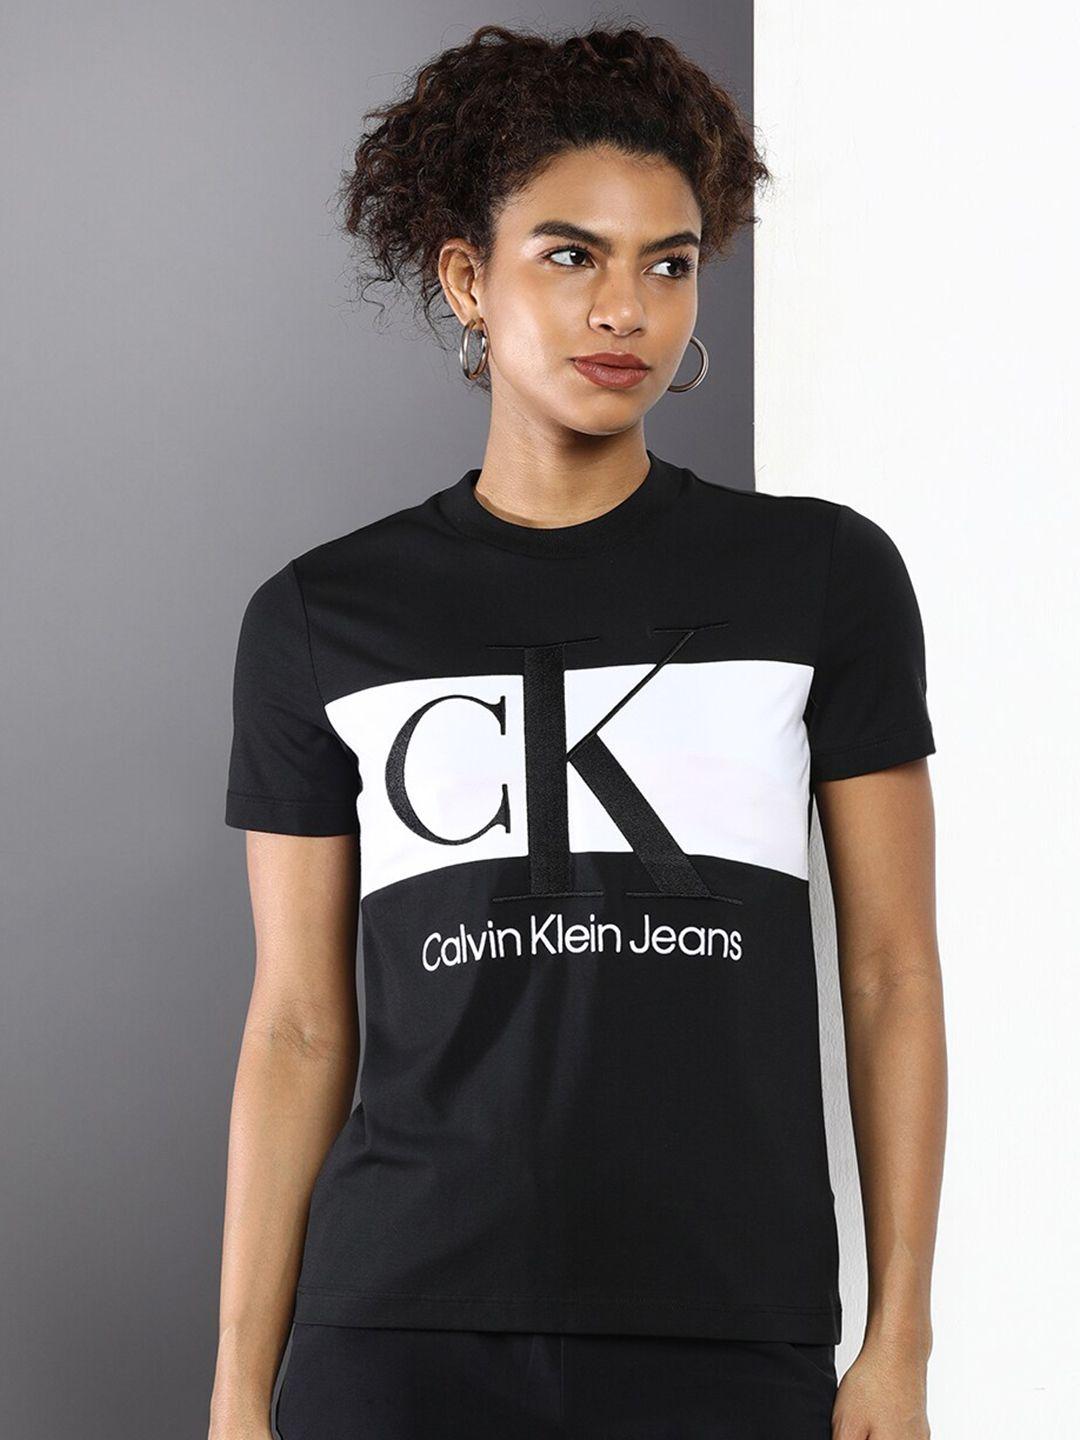 calvin-klein-jeans-women-round-neck-typography-printed-t-shirt